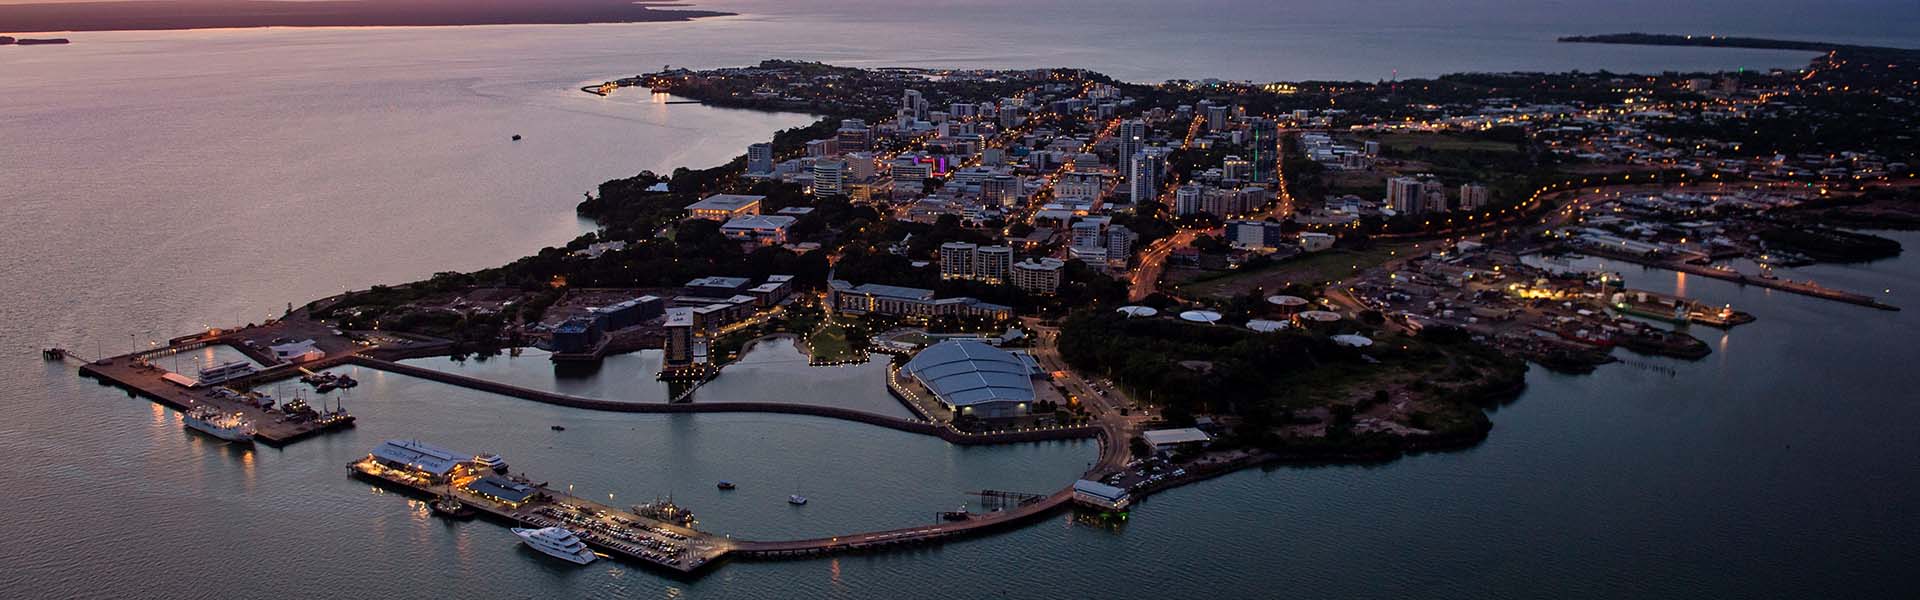 Darwin city aerial at sunset Mandatory credit Tourism NT Shaana McNaught